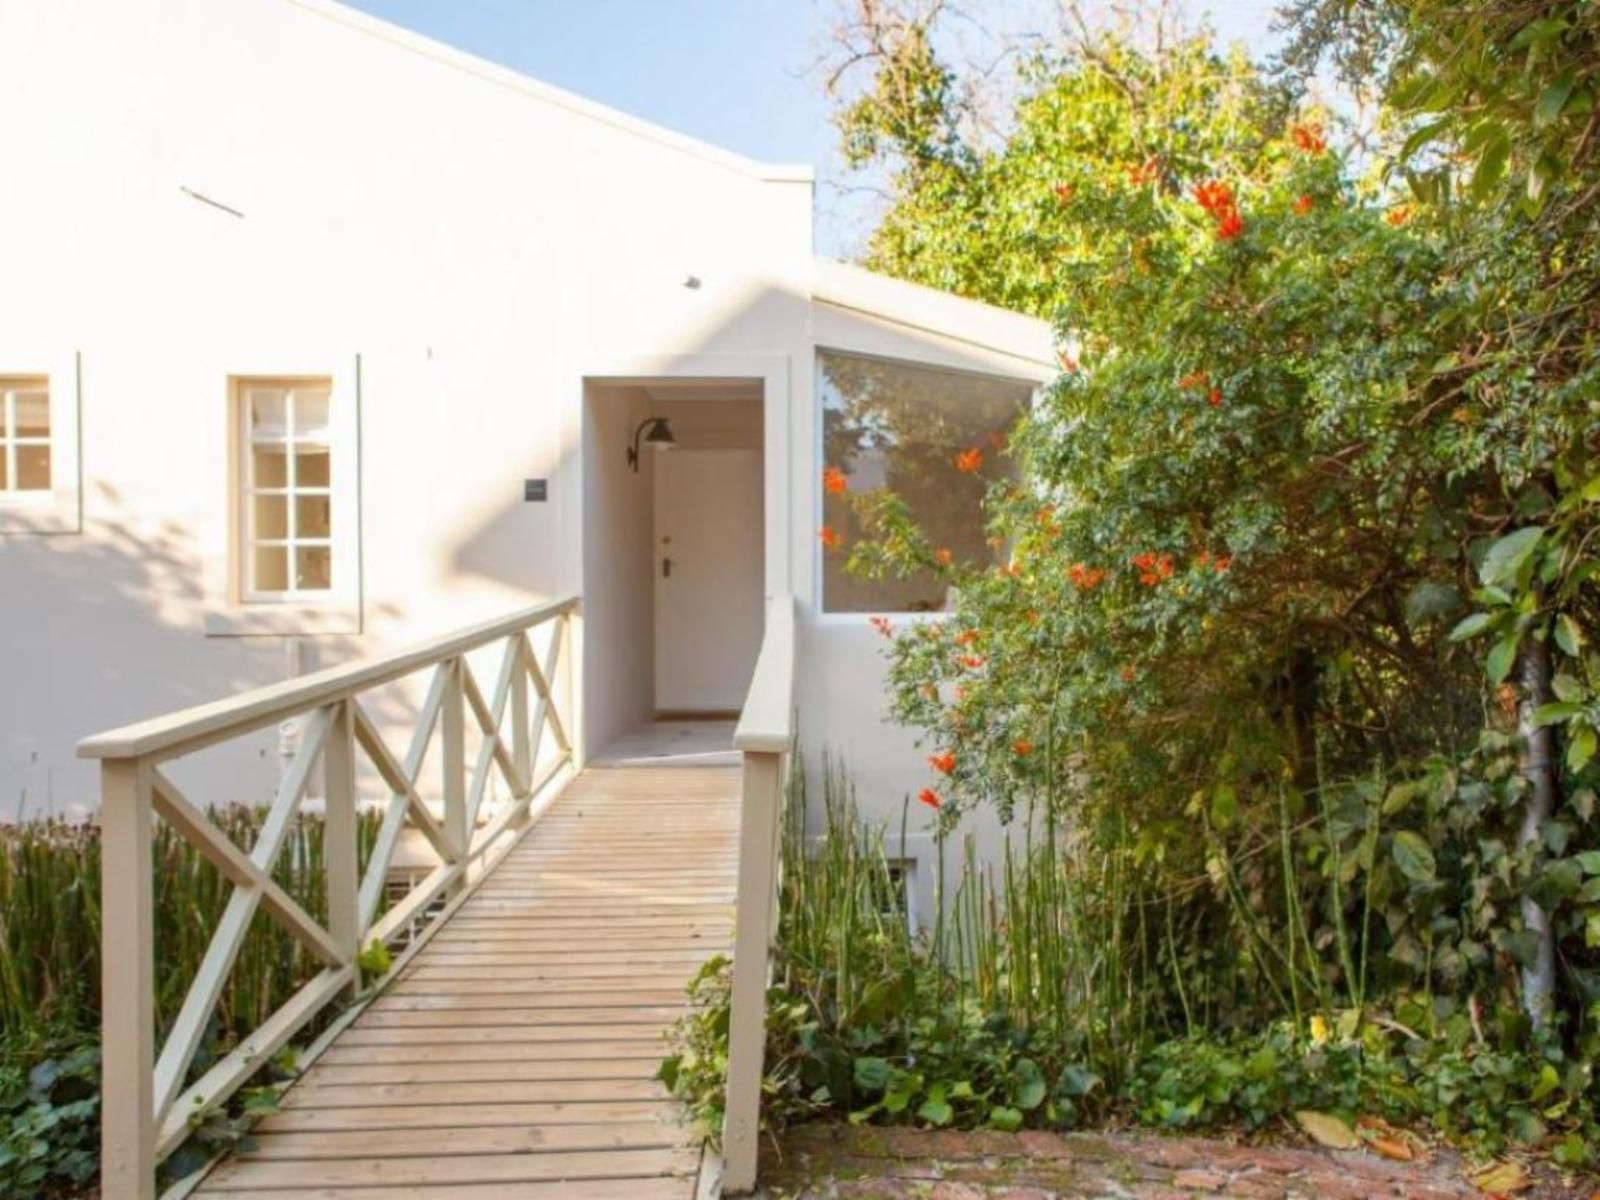 33 Strawberry Lane Constantia Cape Town Western Cape South Africa House, Building, Architecture, Garden, Nature, Plant